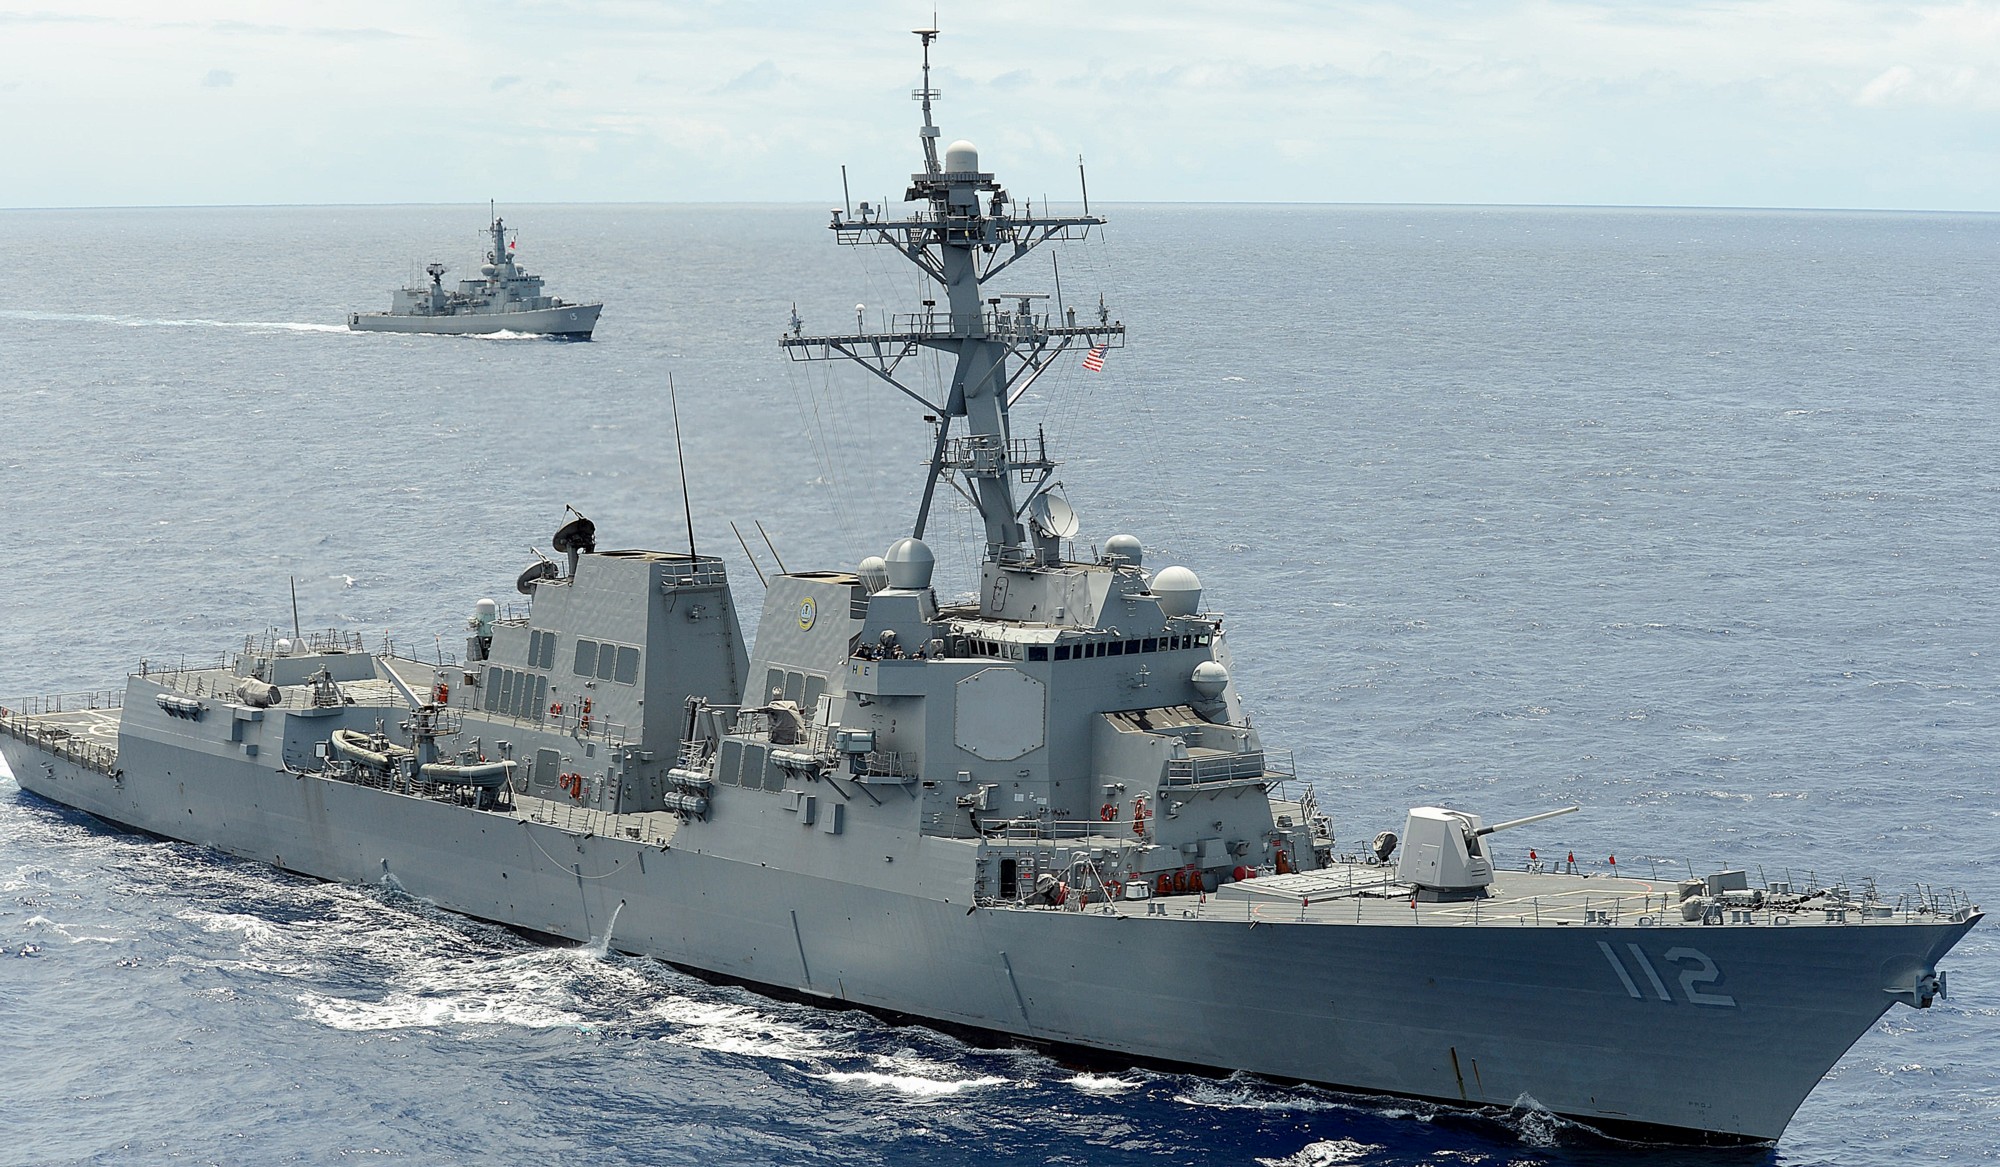 ddg-112 uss michael murphy arleigh burke class guided missile destroyer aegis us navy rimpac 2014 20